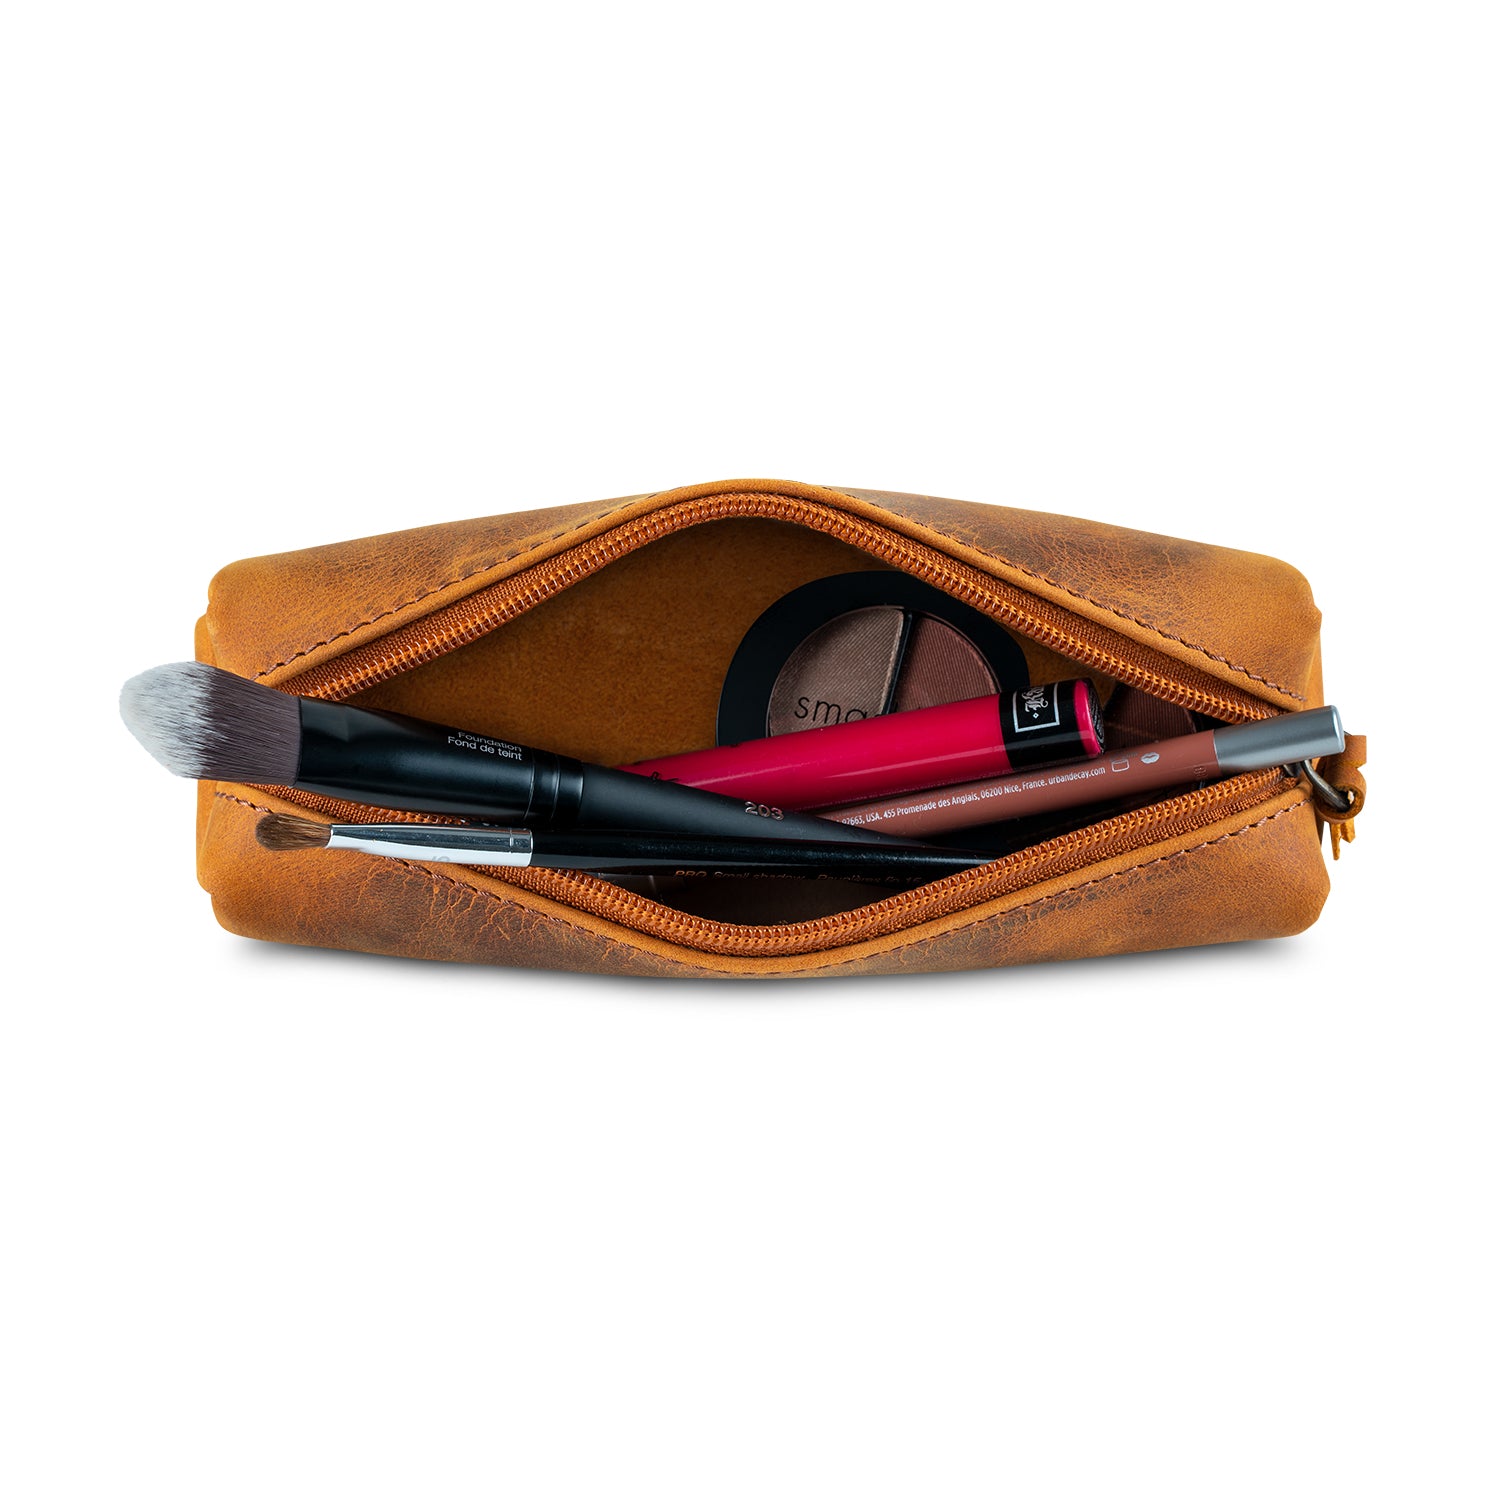 ertquji Nurse Medical Theme Pencil Case Holder Pouch With Zipper Leather  Pen Pencil Bags Box Organizer Cosmetic Makeup Bag Storage Bag